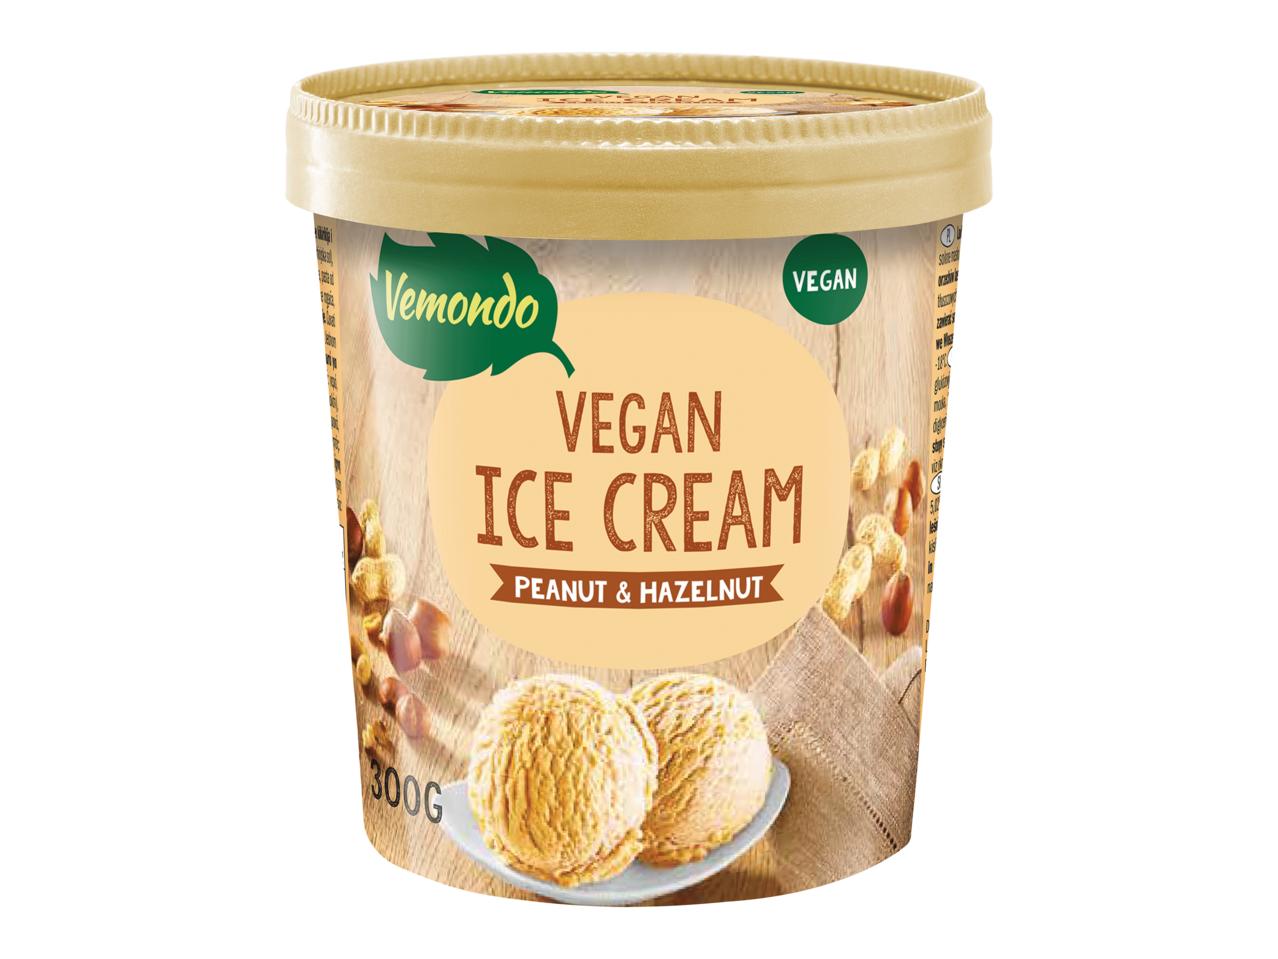 VEMONDO Vegan Ice Cream